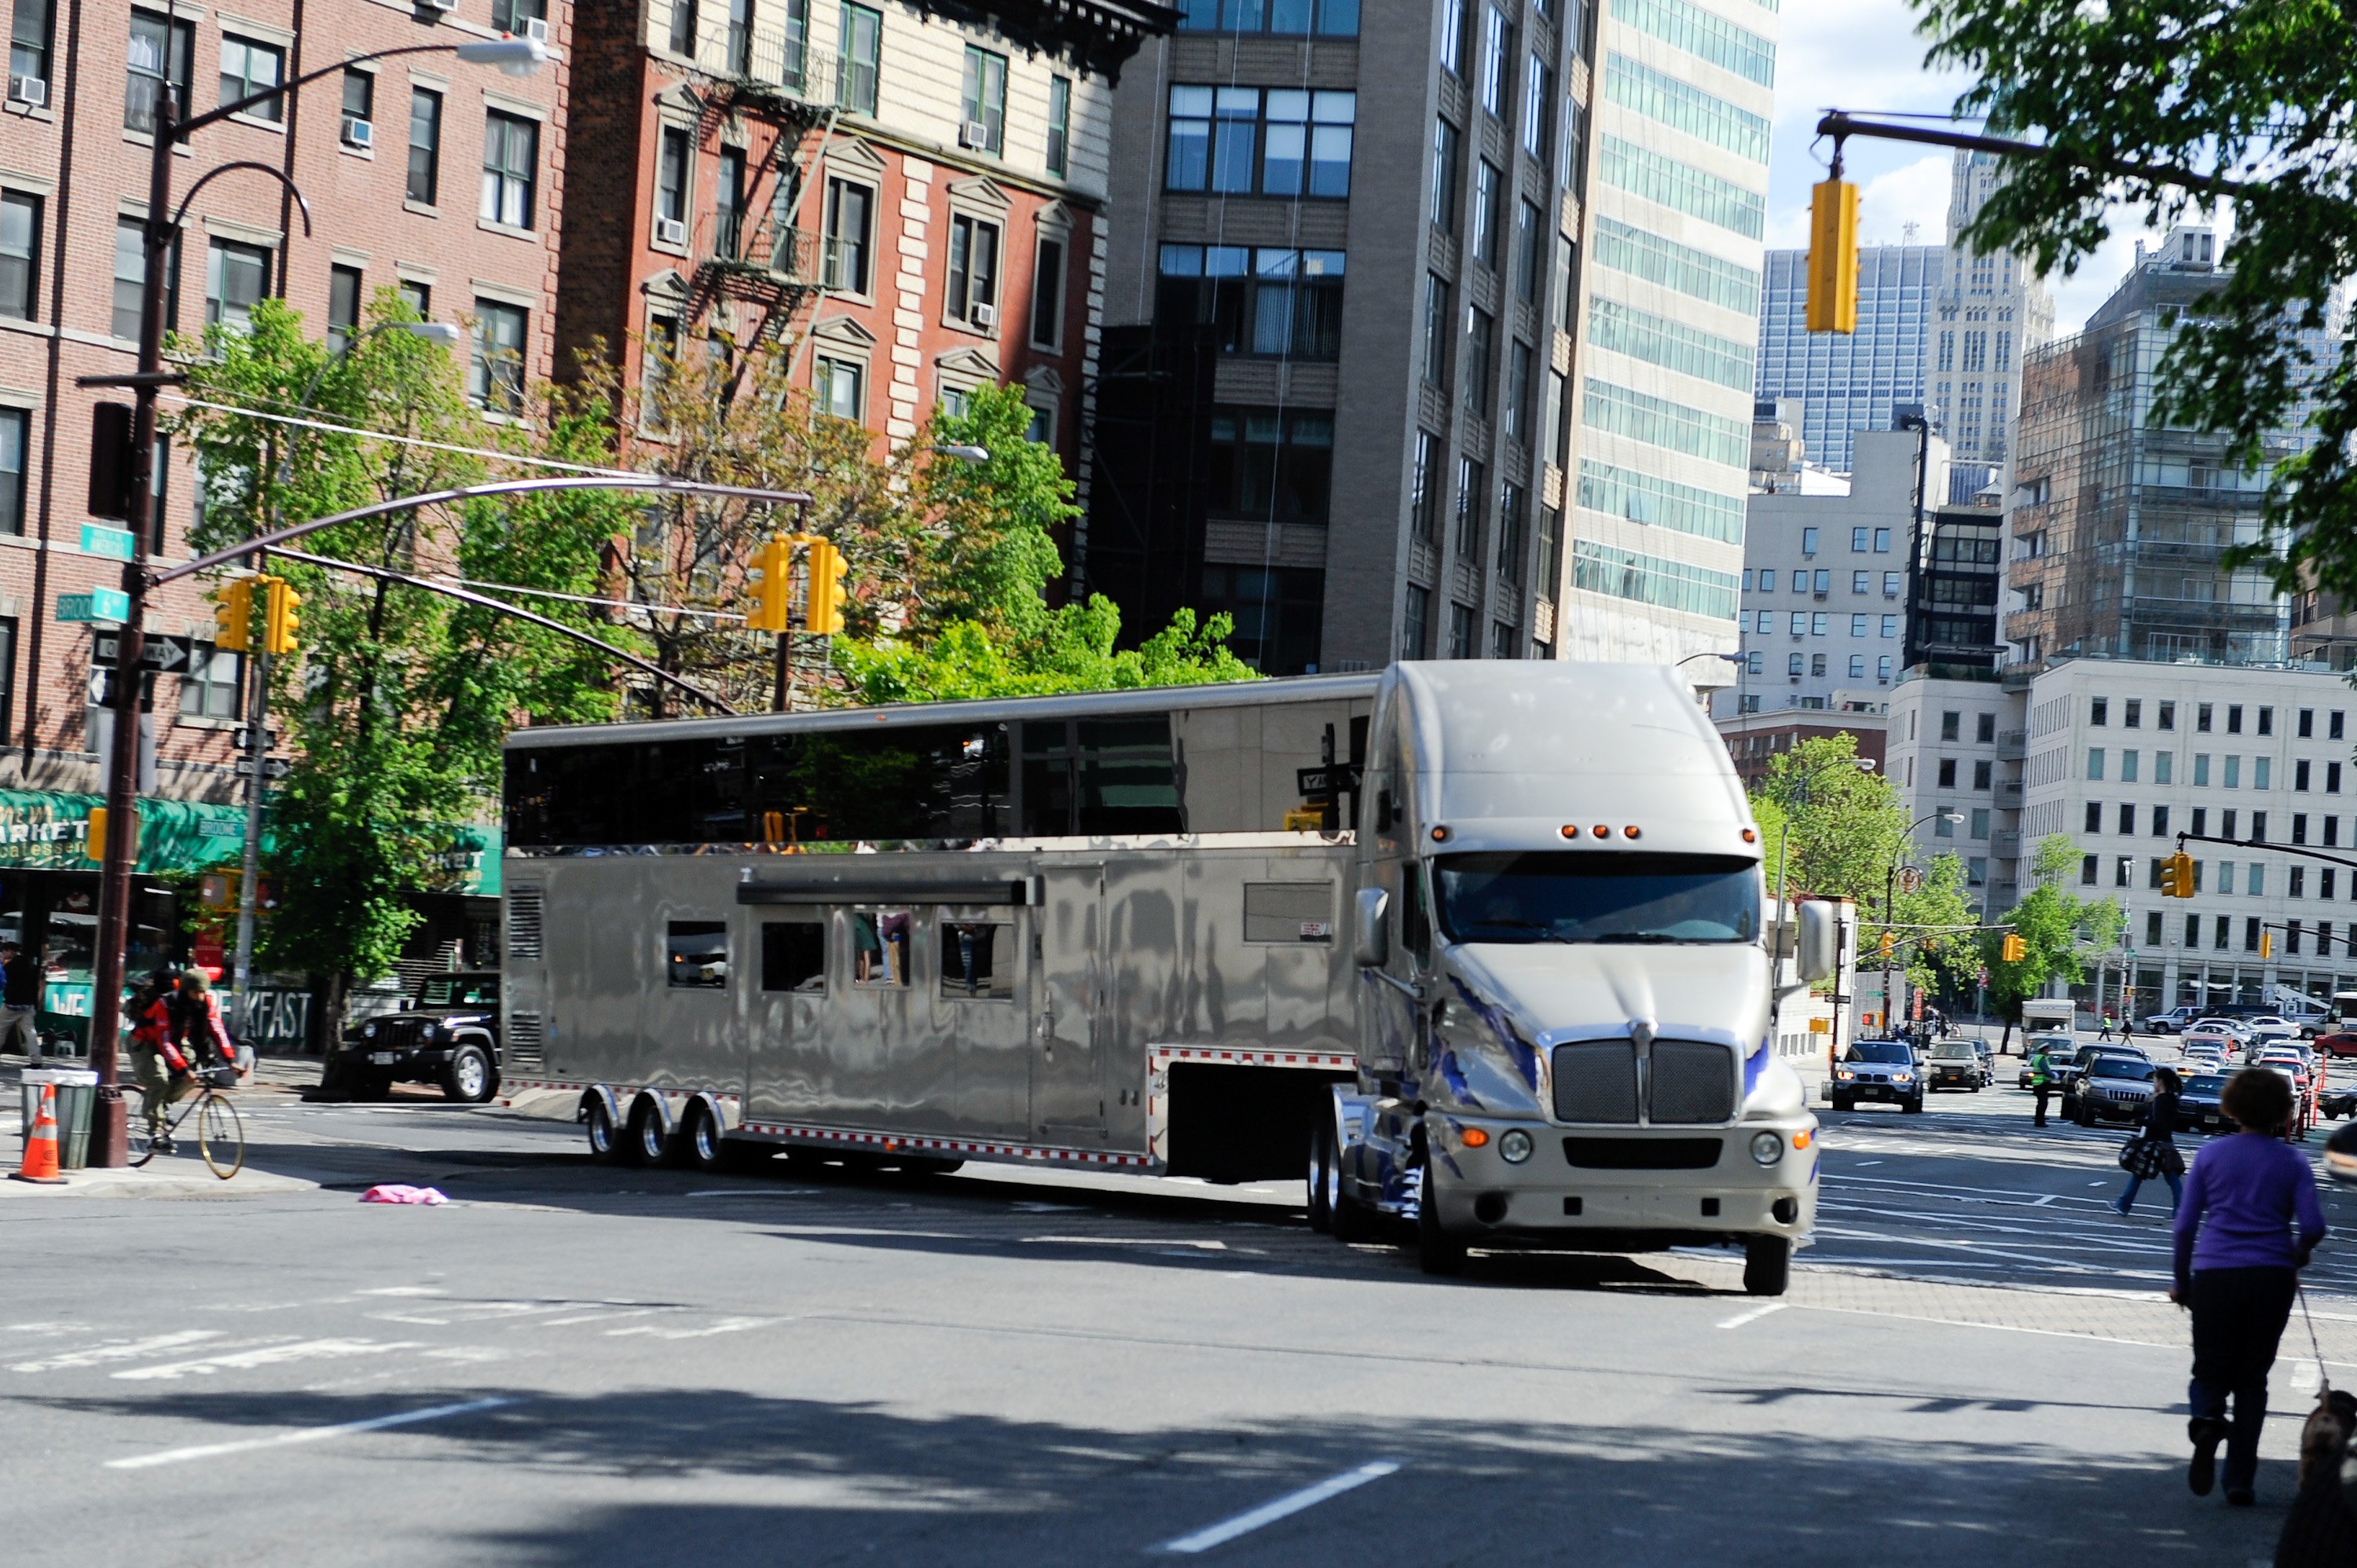 Will Smith's trailer in New York City, New York, 2011